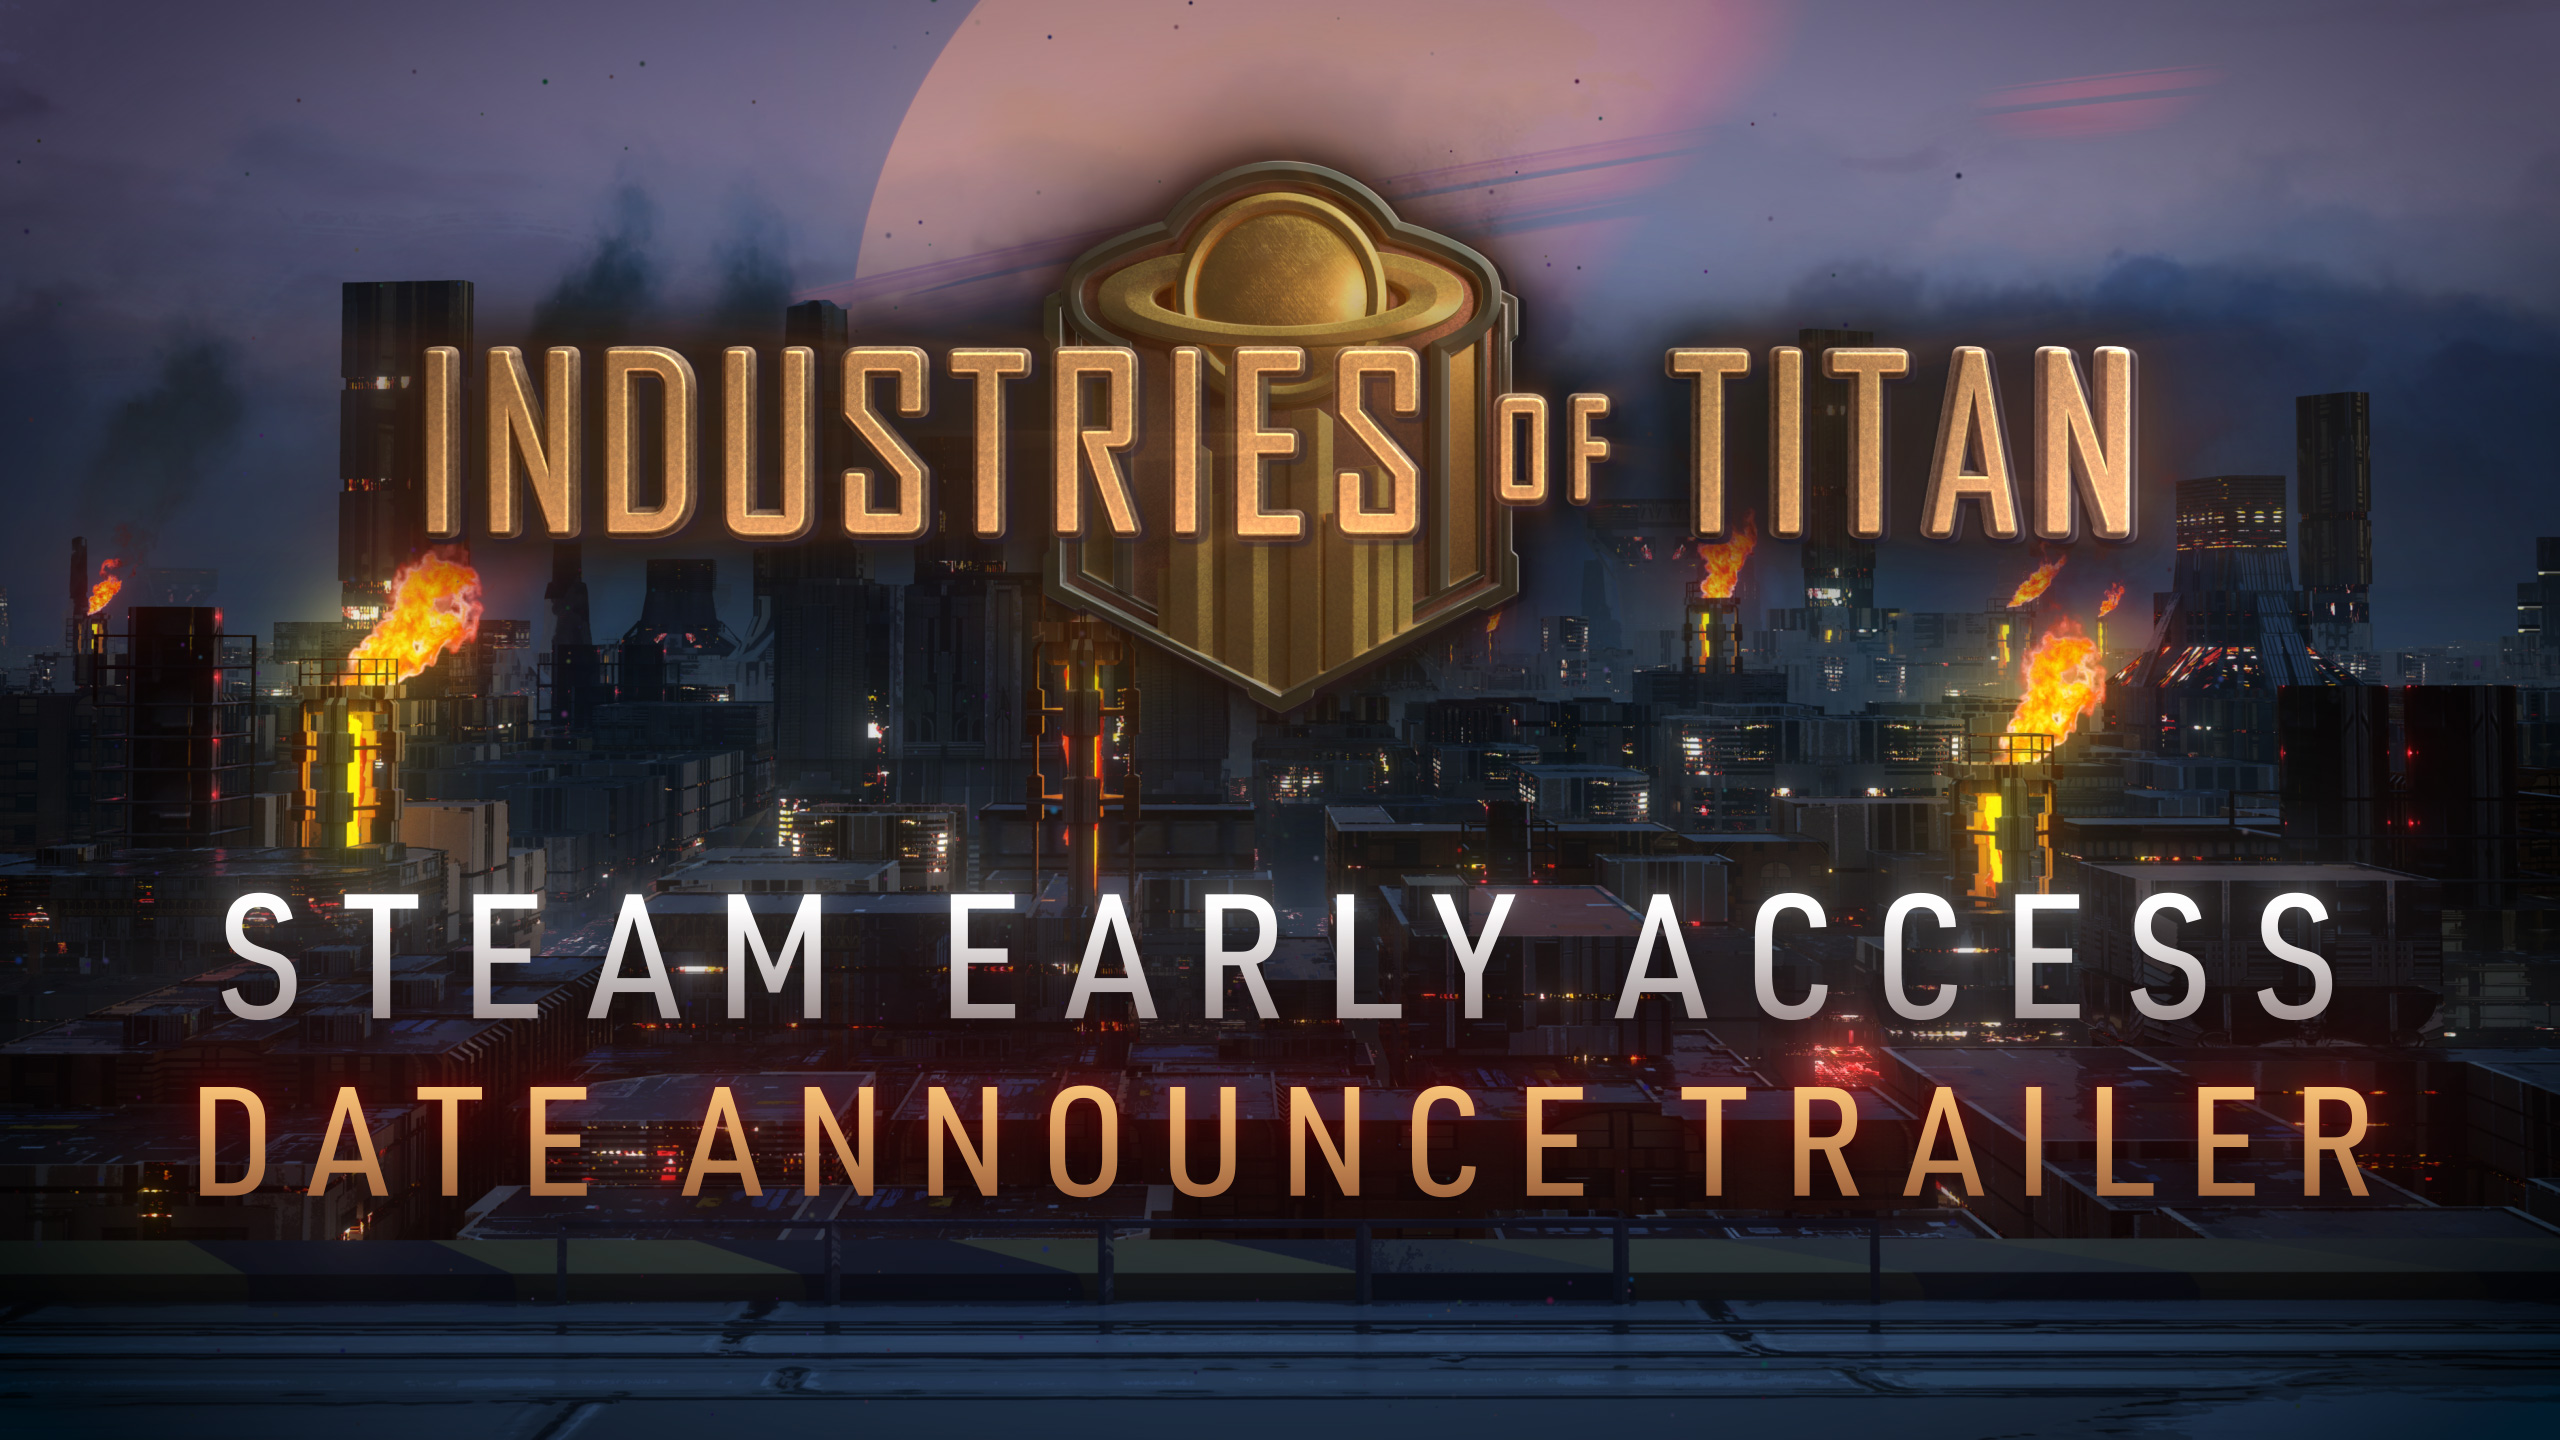 Industries of titan стим фото 31